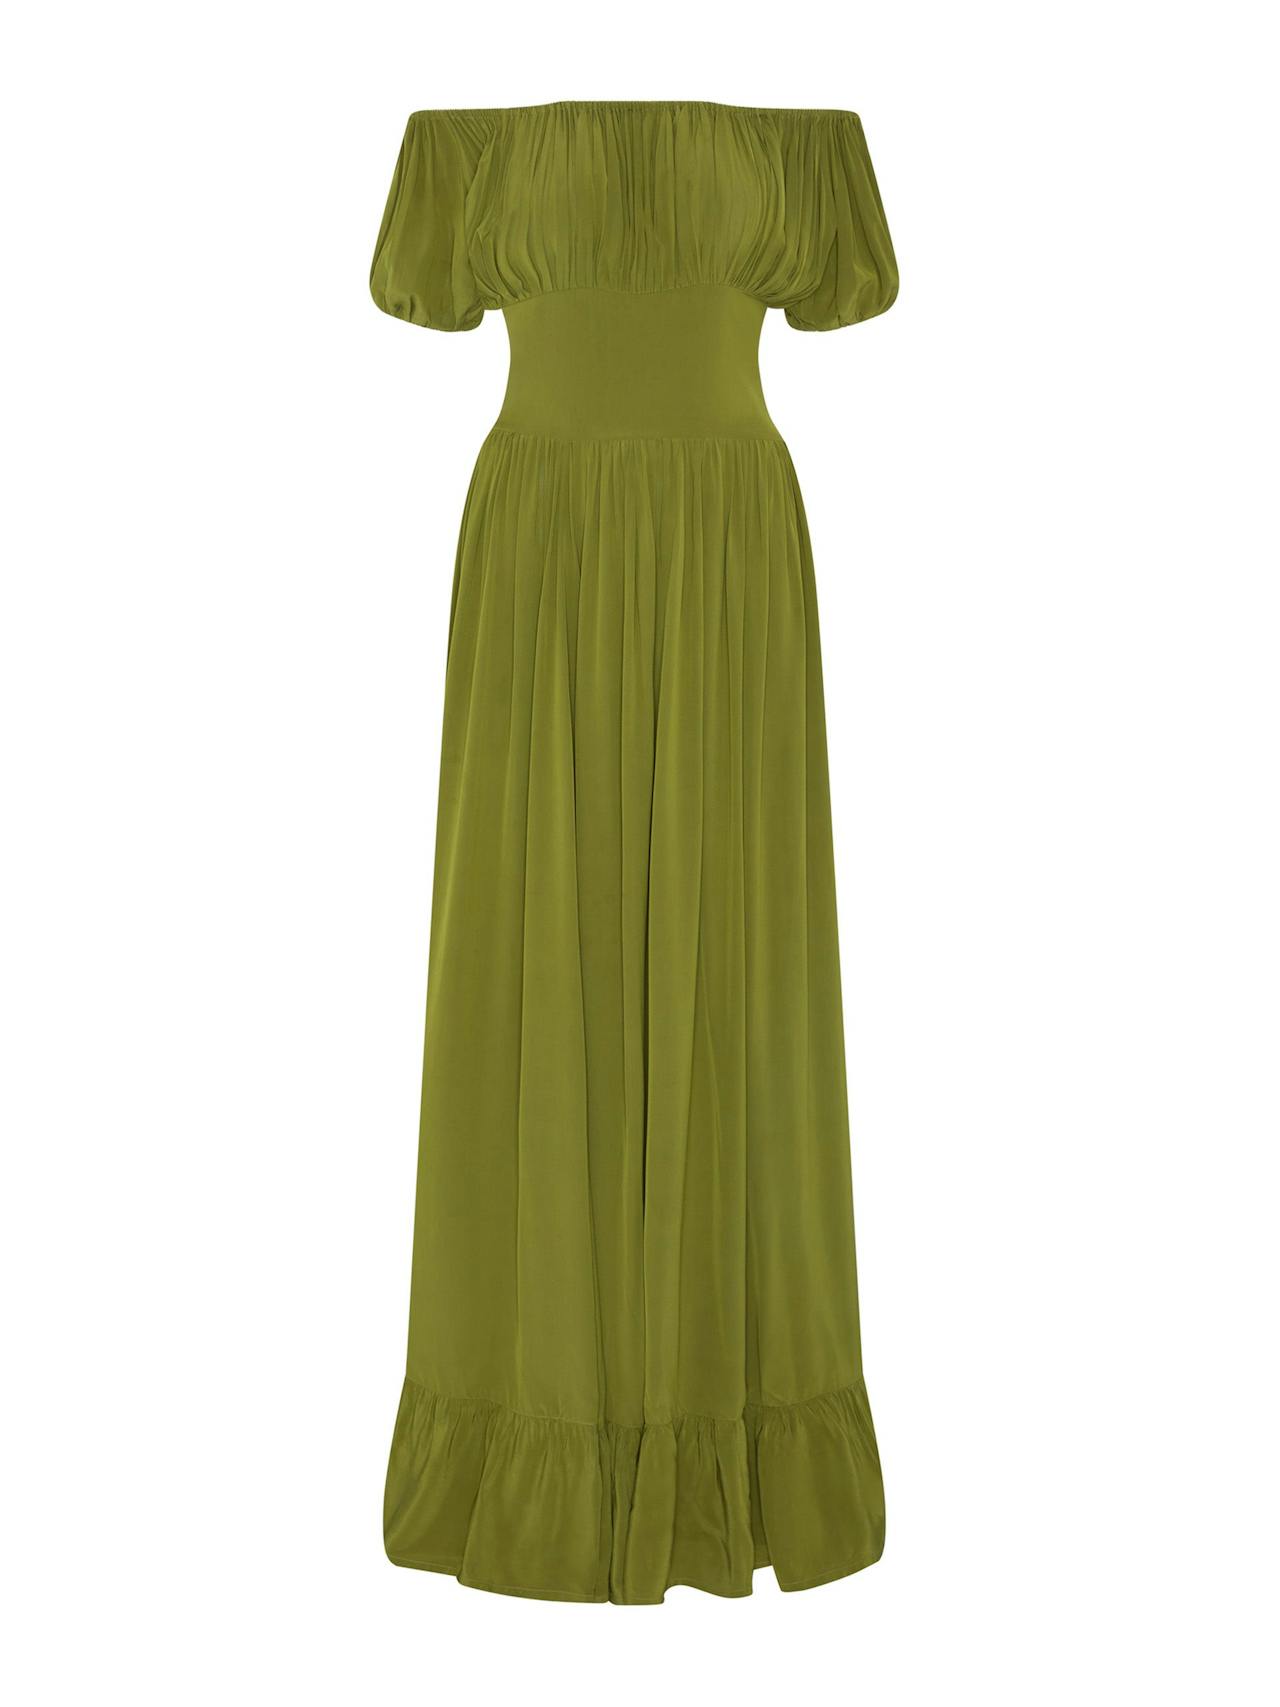 Hestia dress in crepe de chine avocado green